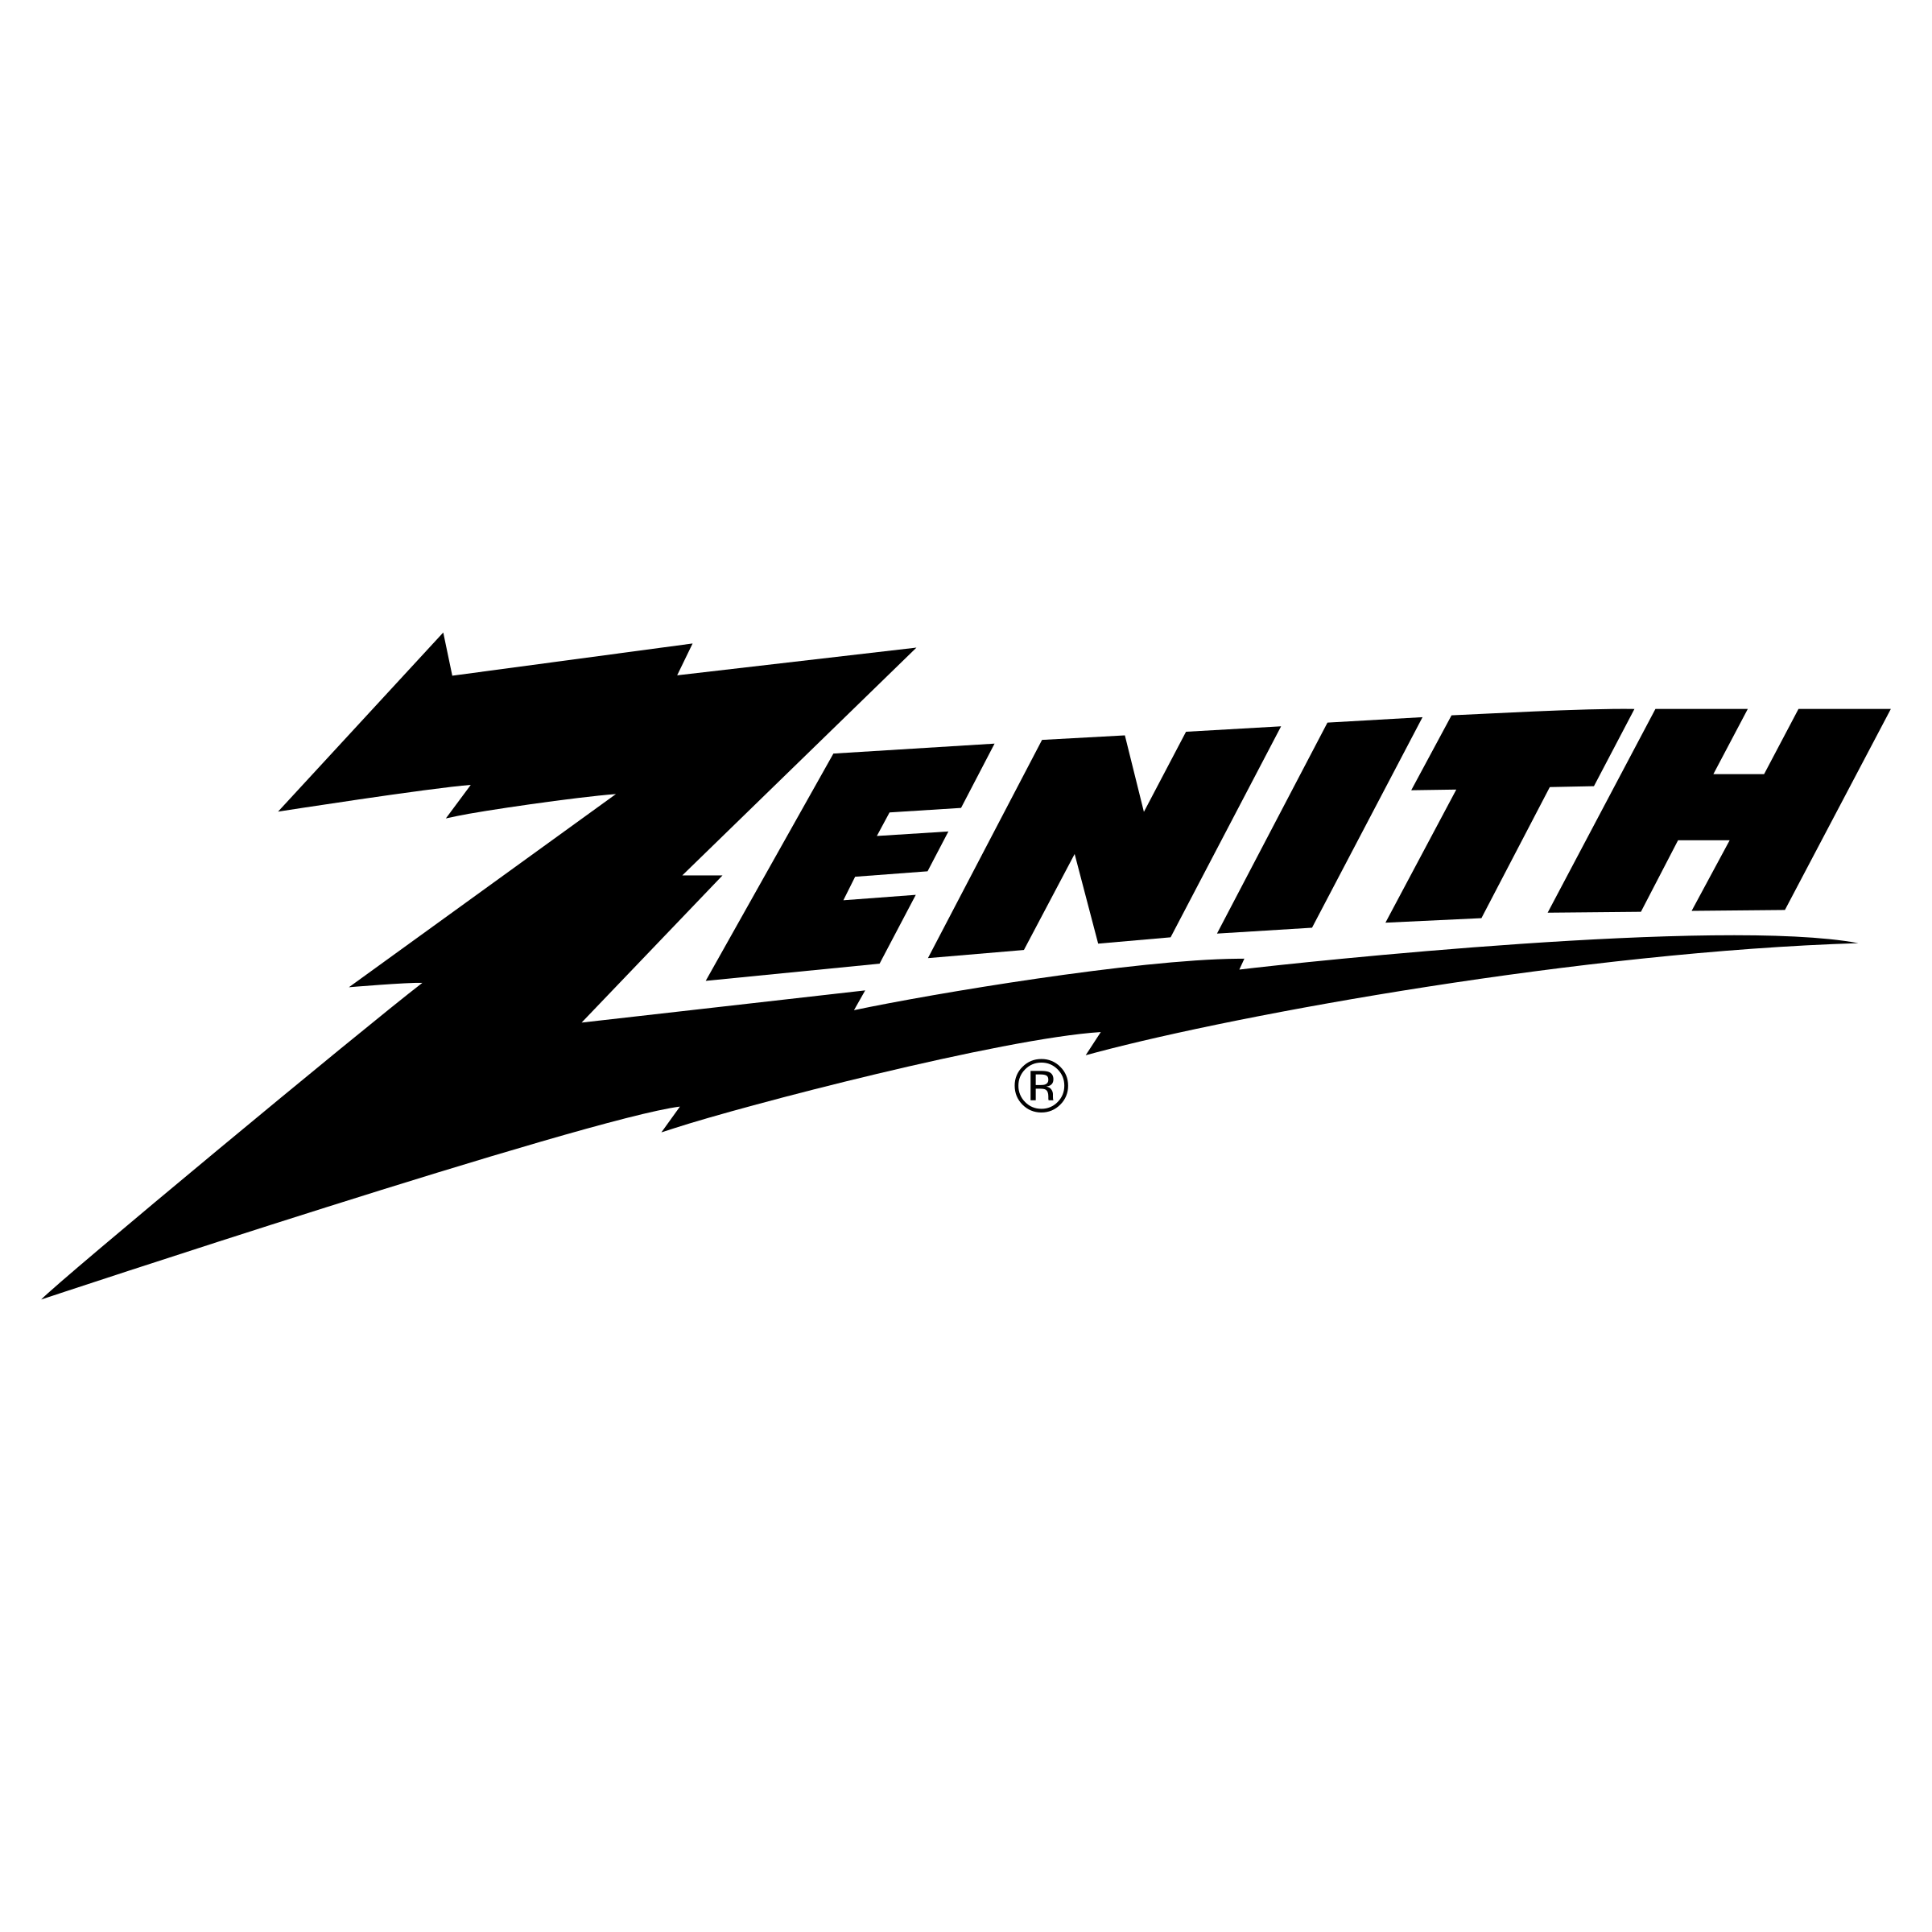 Zenith Logo - Zenith Logo PNG Transparent & SVG Vector